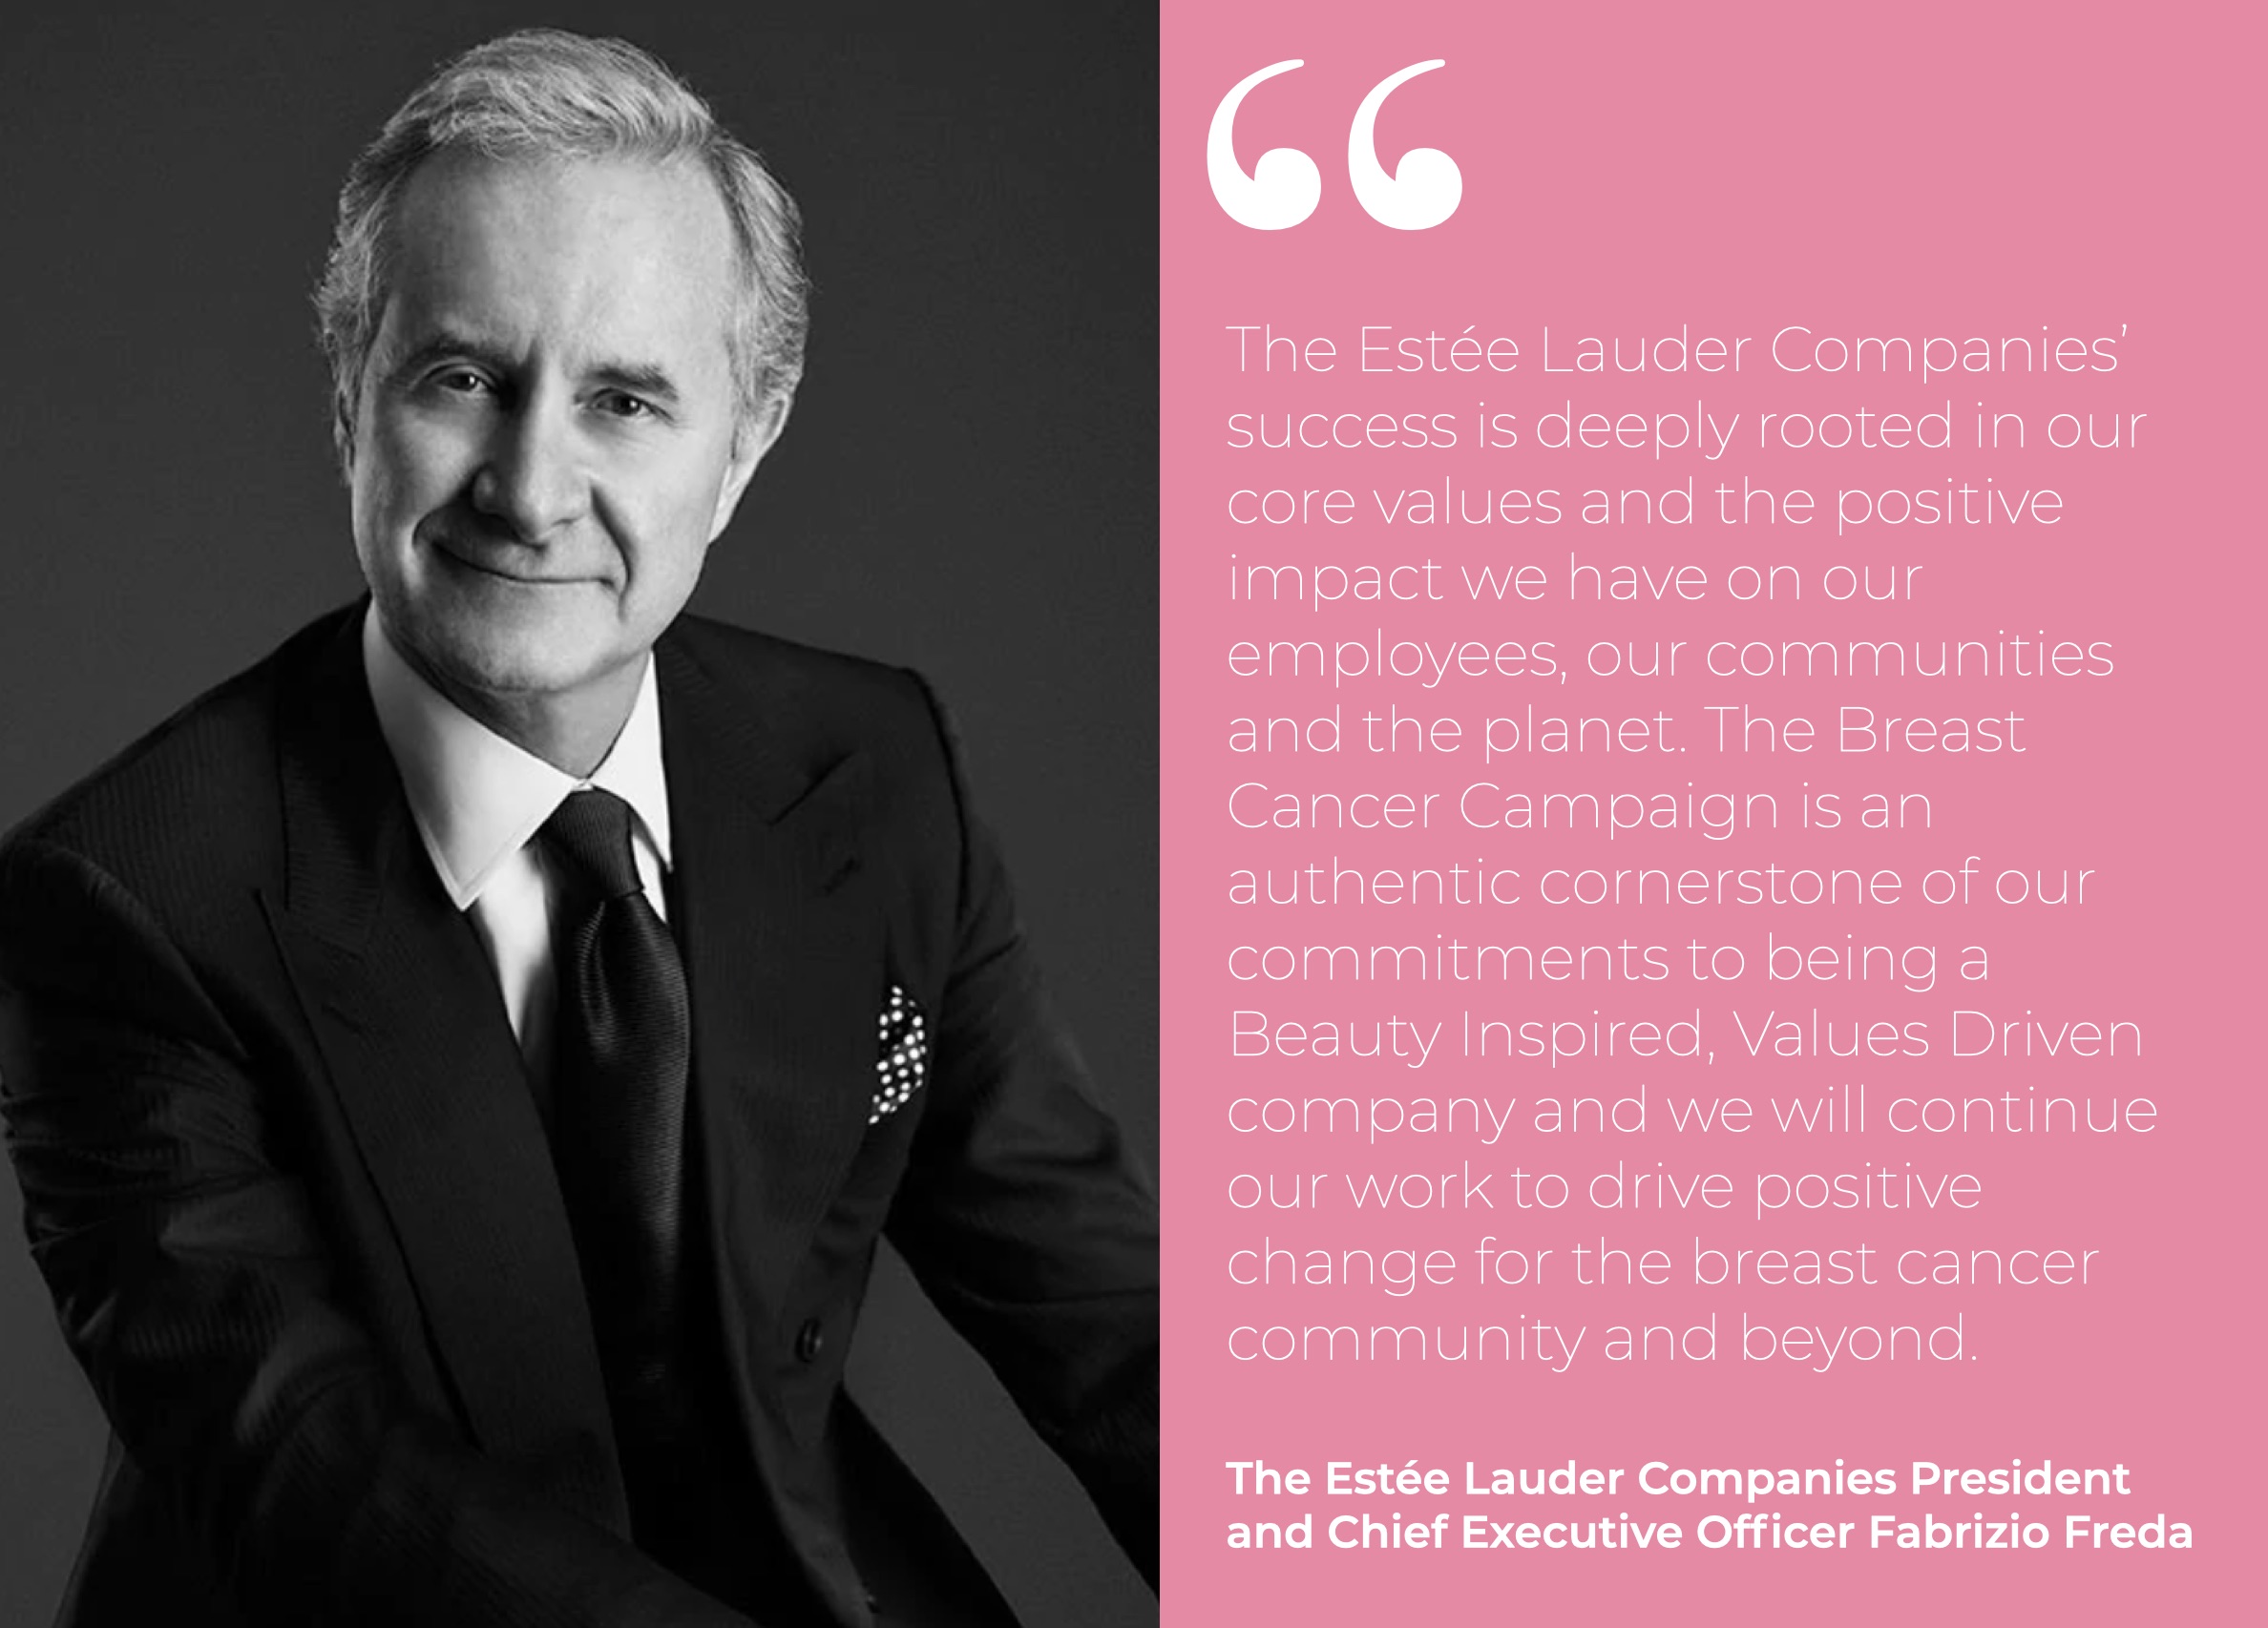 Estee Lauder Companies Mission, Vision & Values